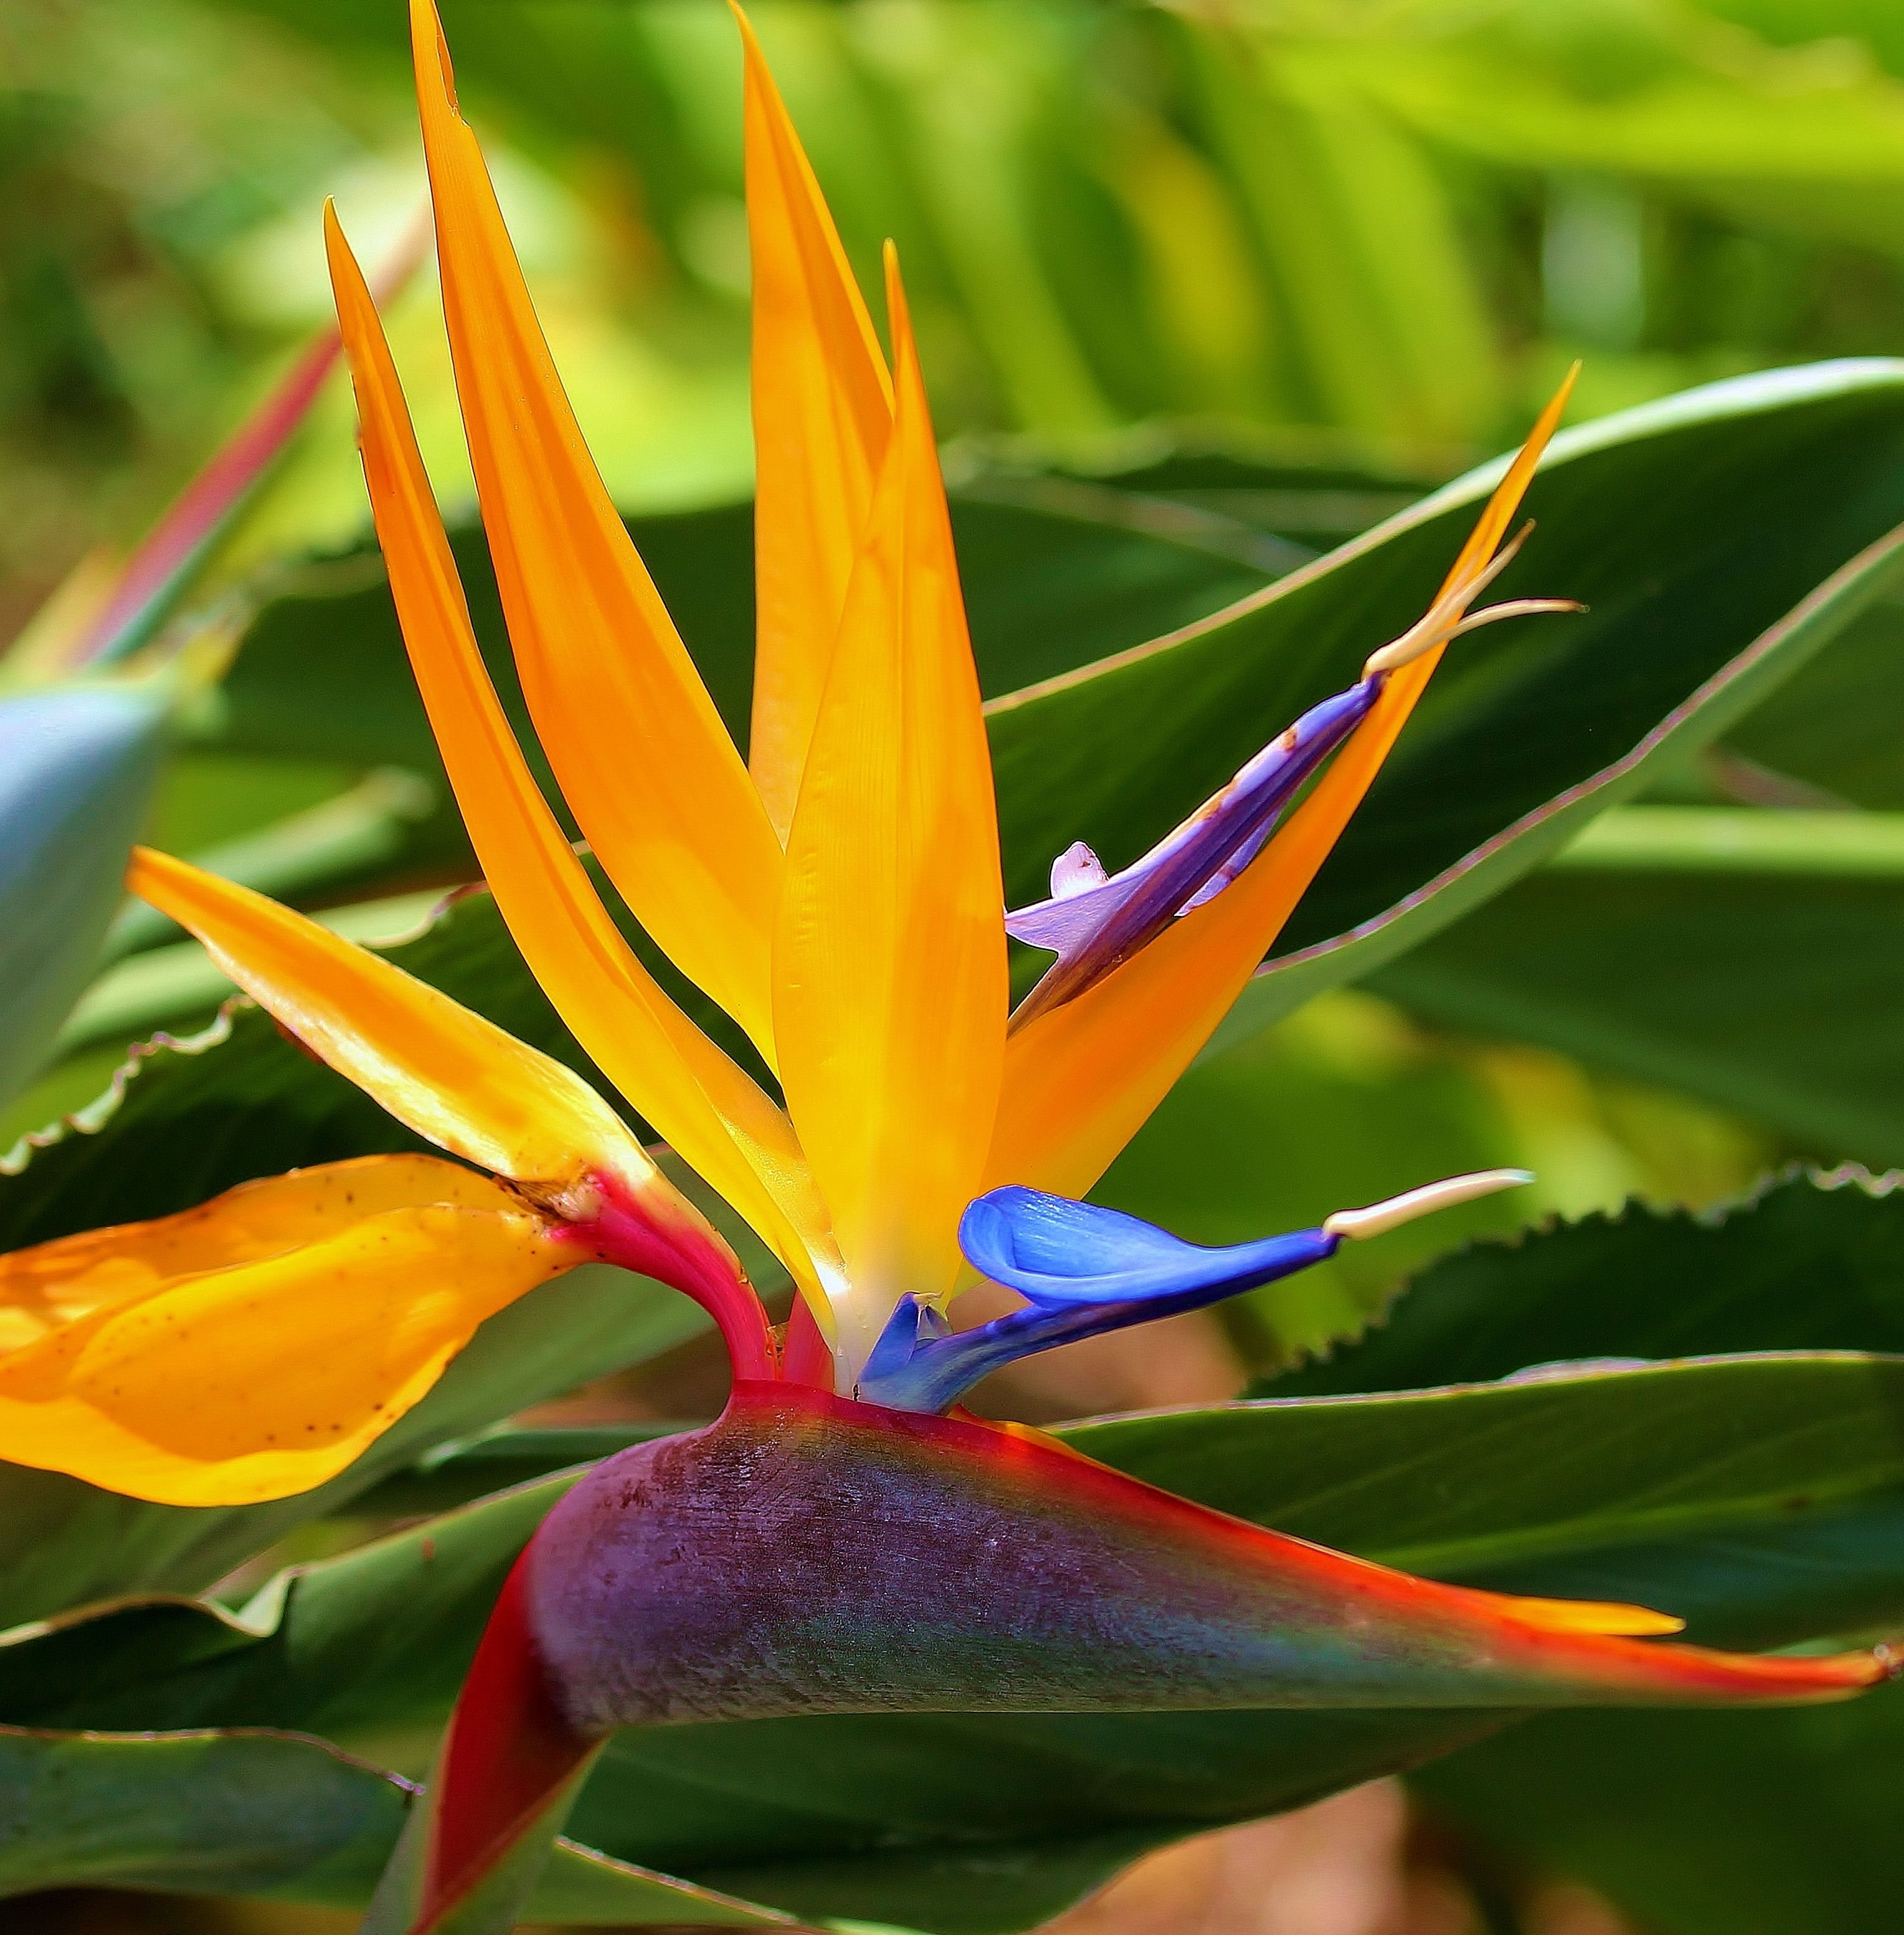 10 Greatest birds of paradise flower desktop wallpaper You Can Use It ...